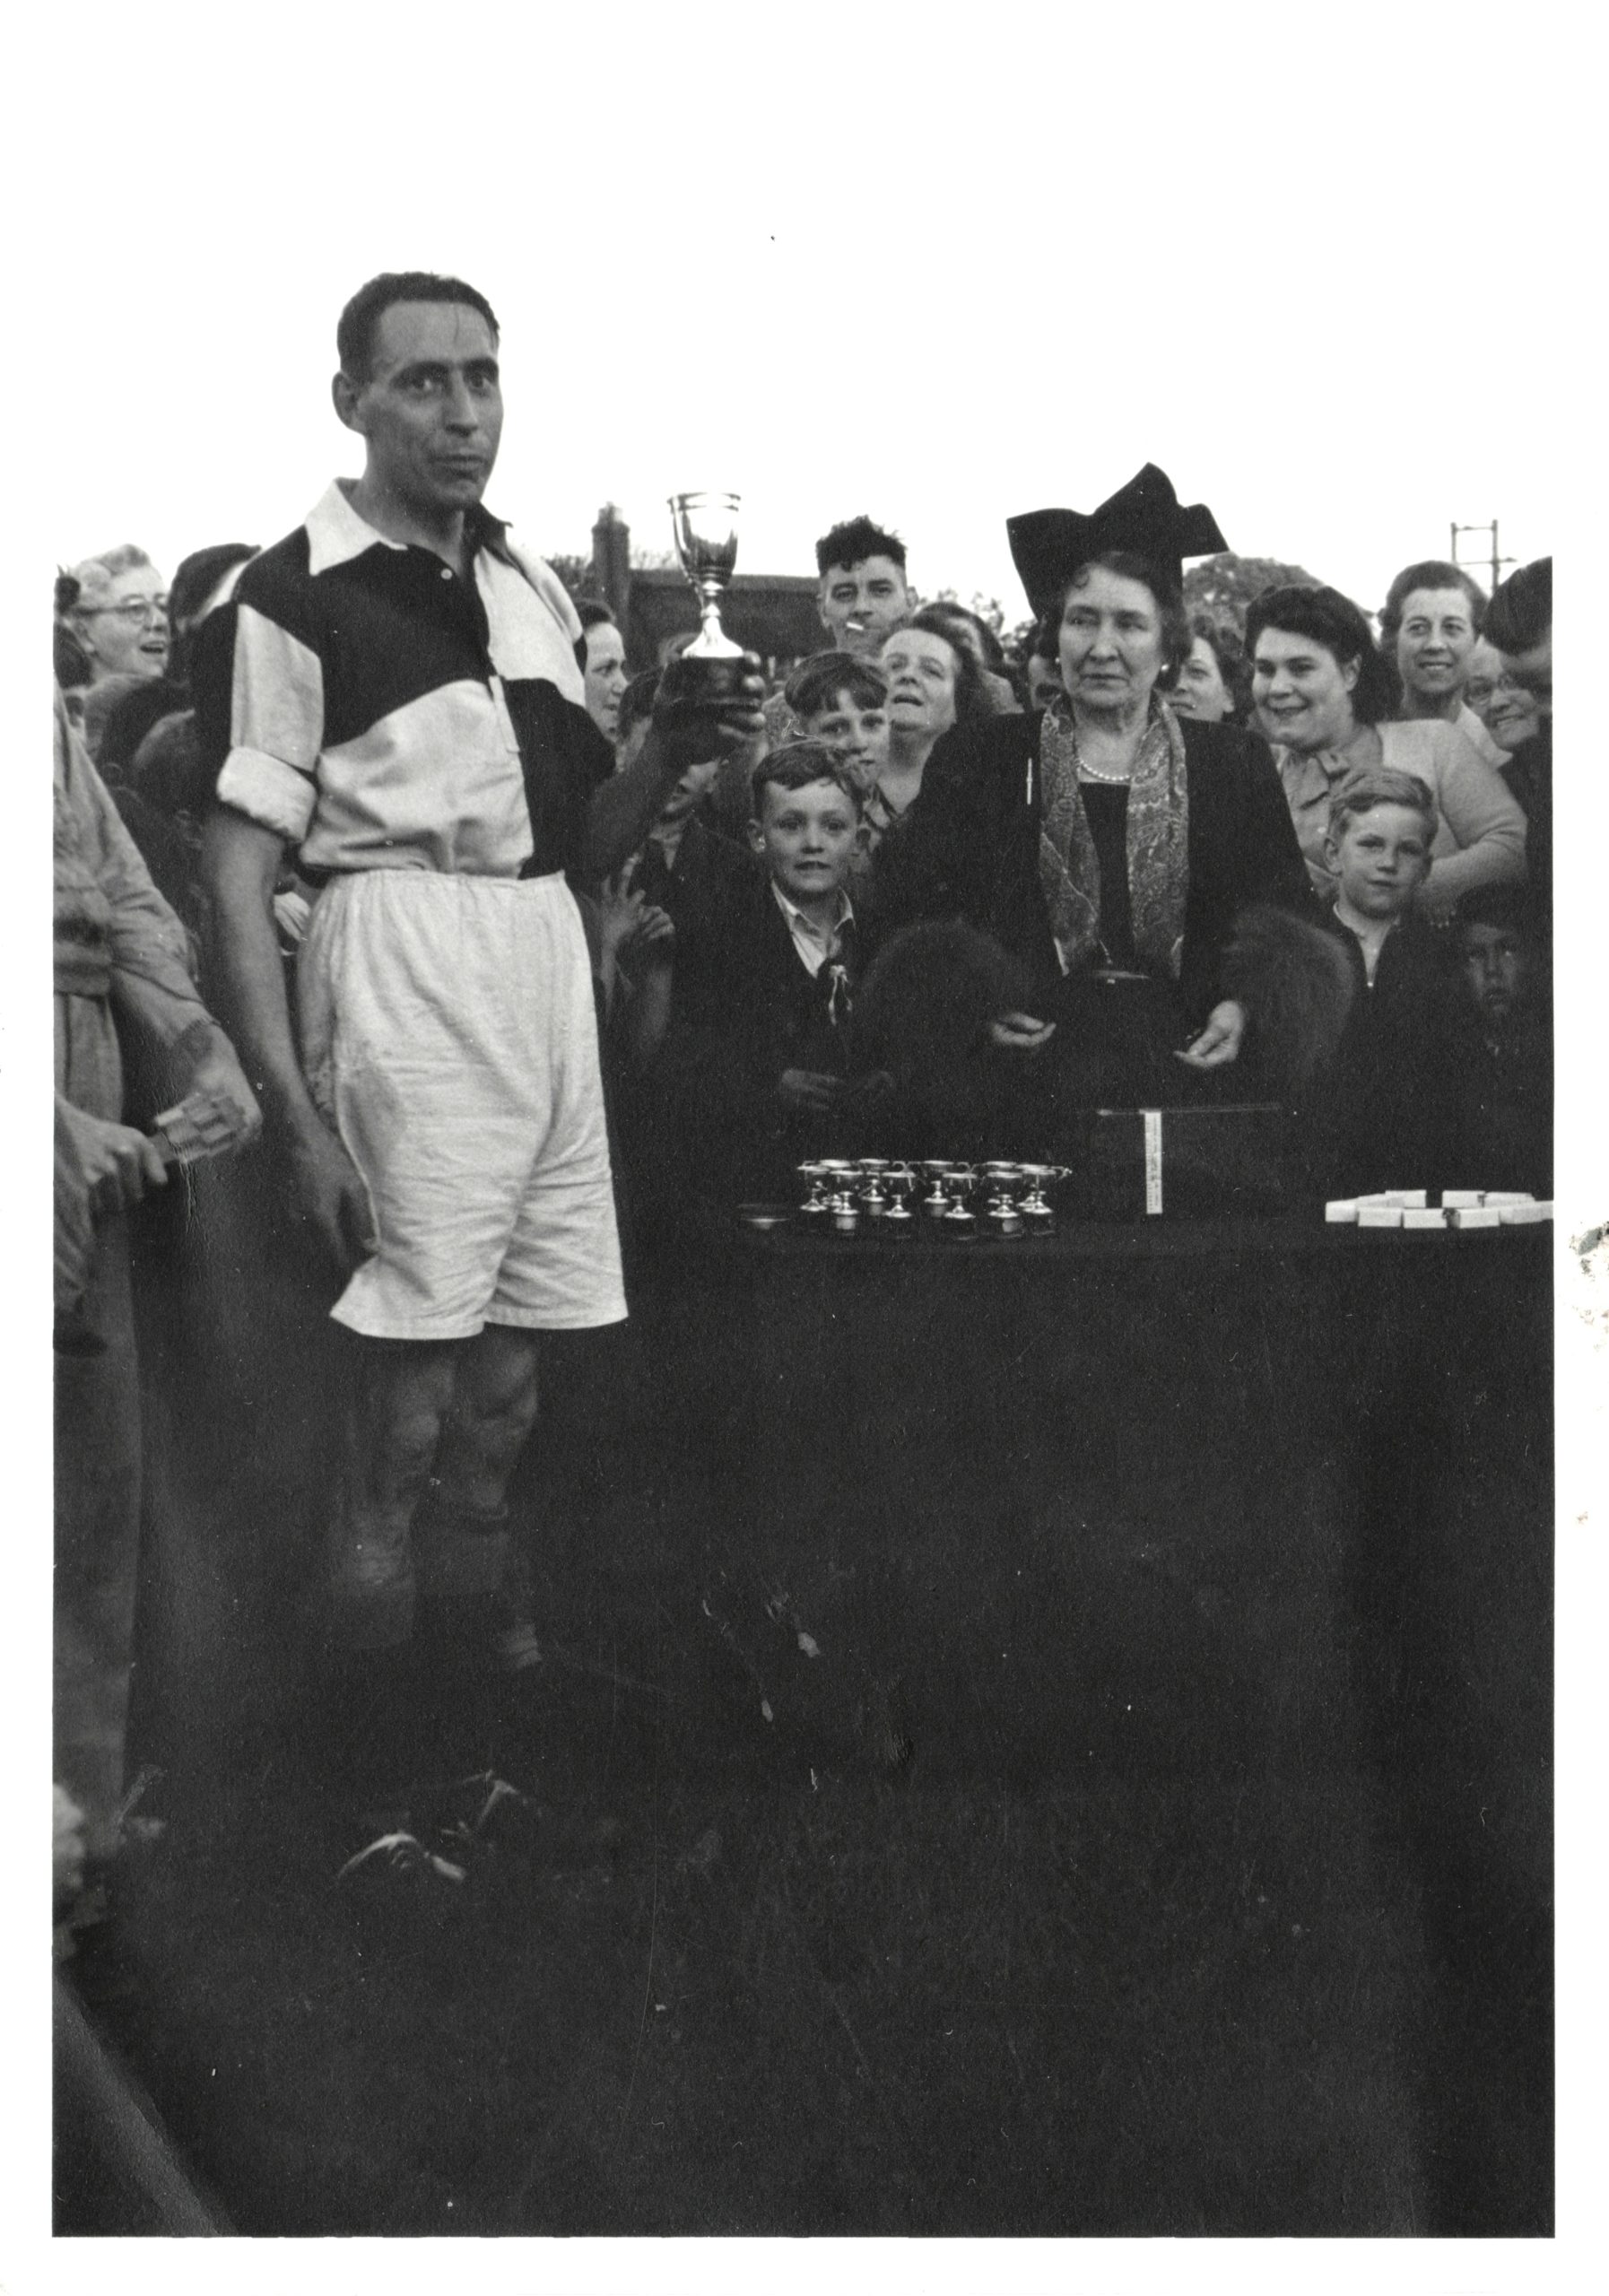 Fenstanton Football club in the 1950s